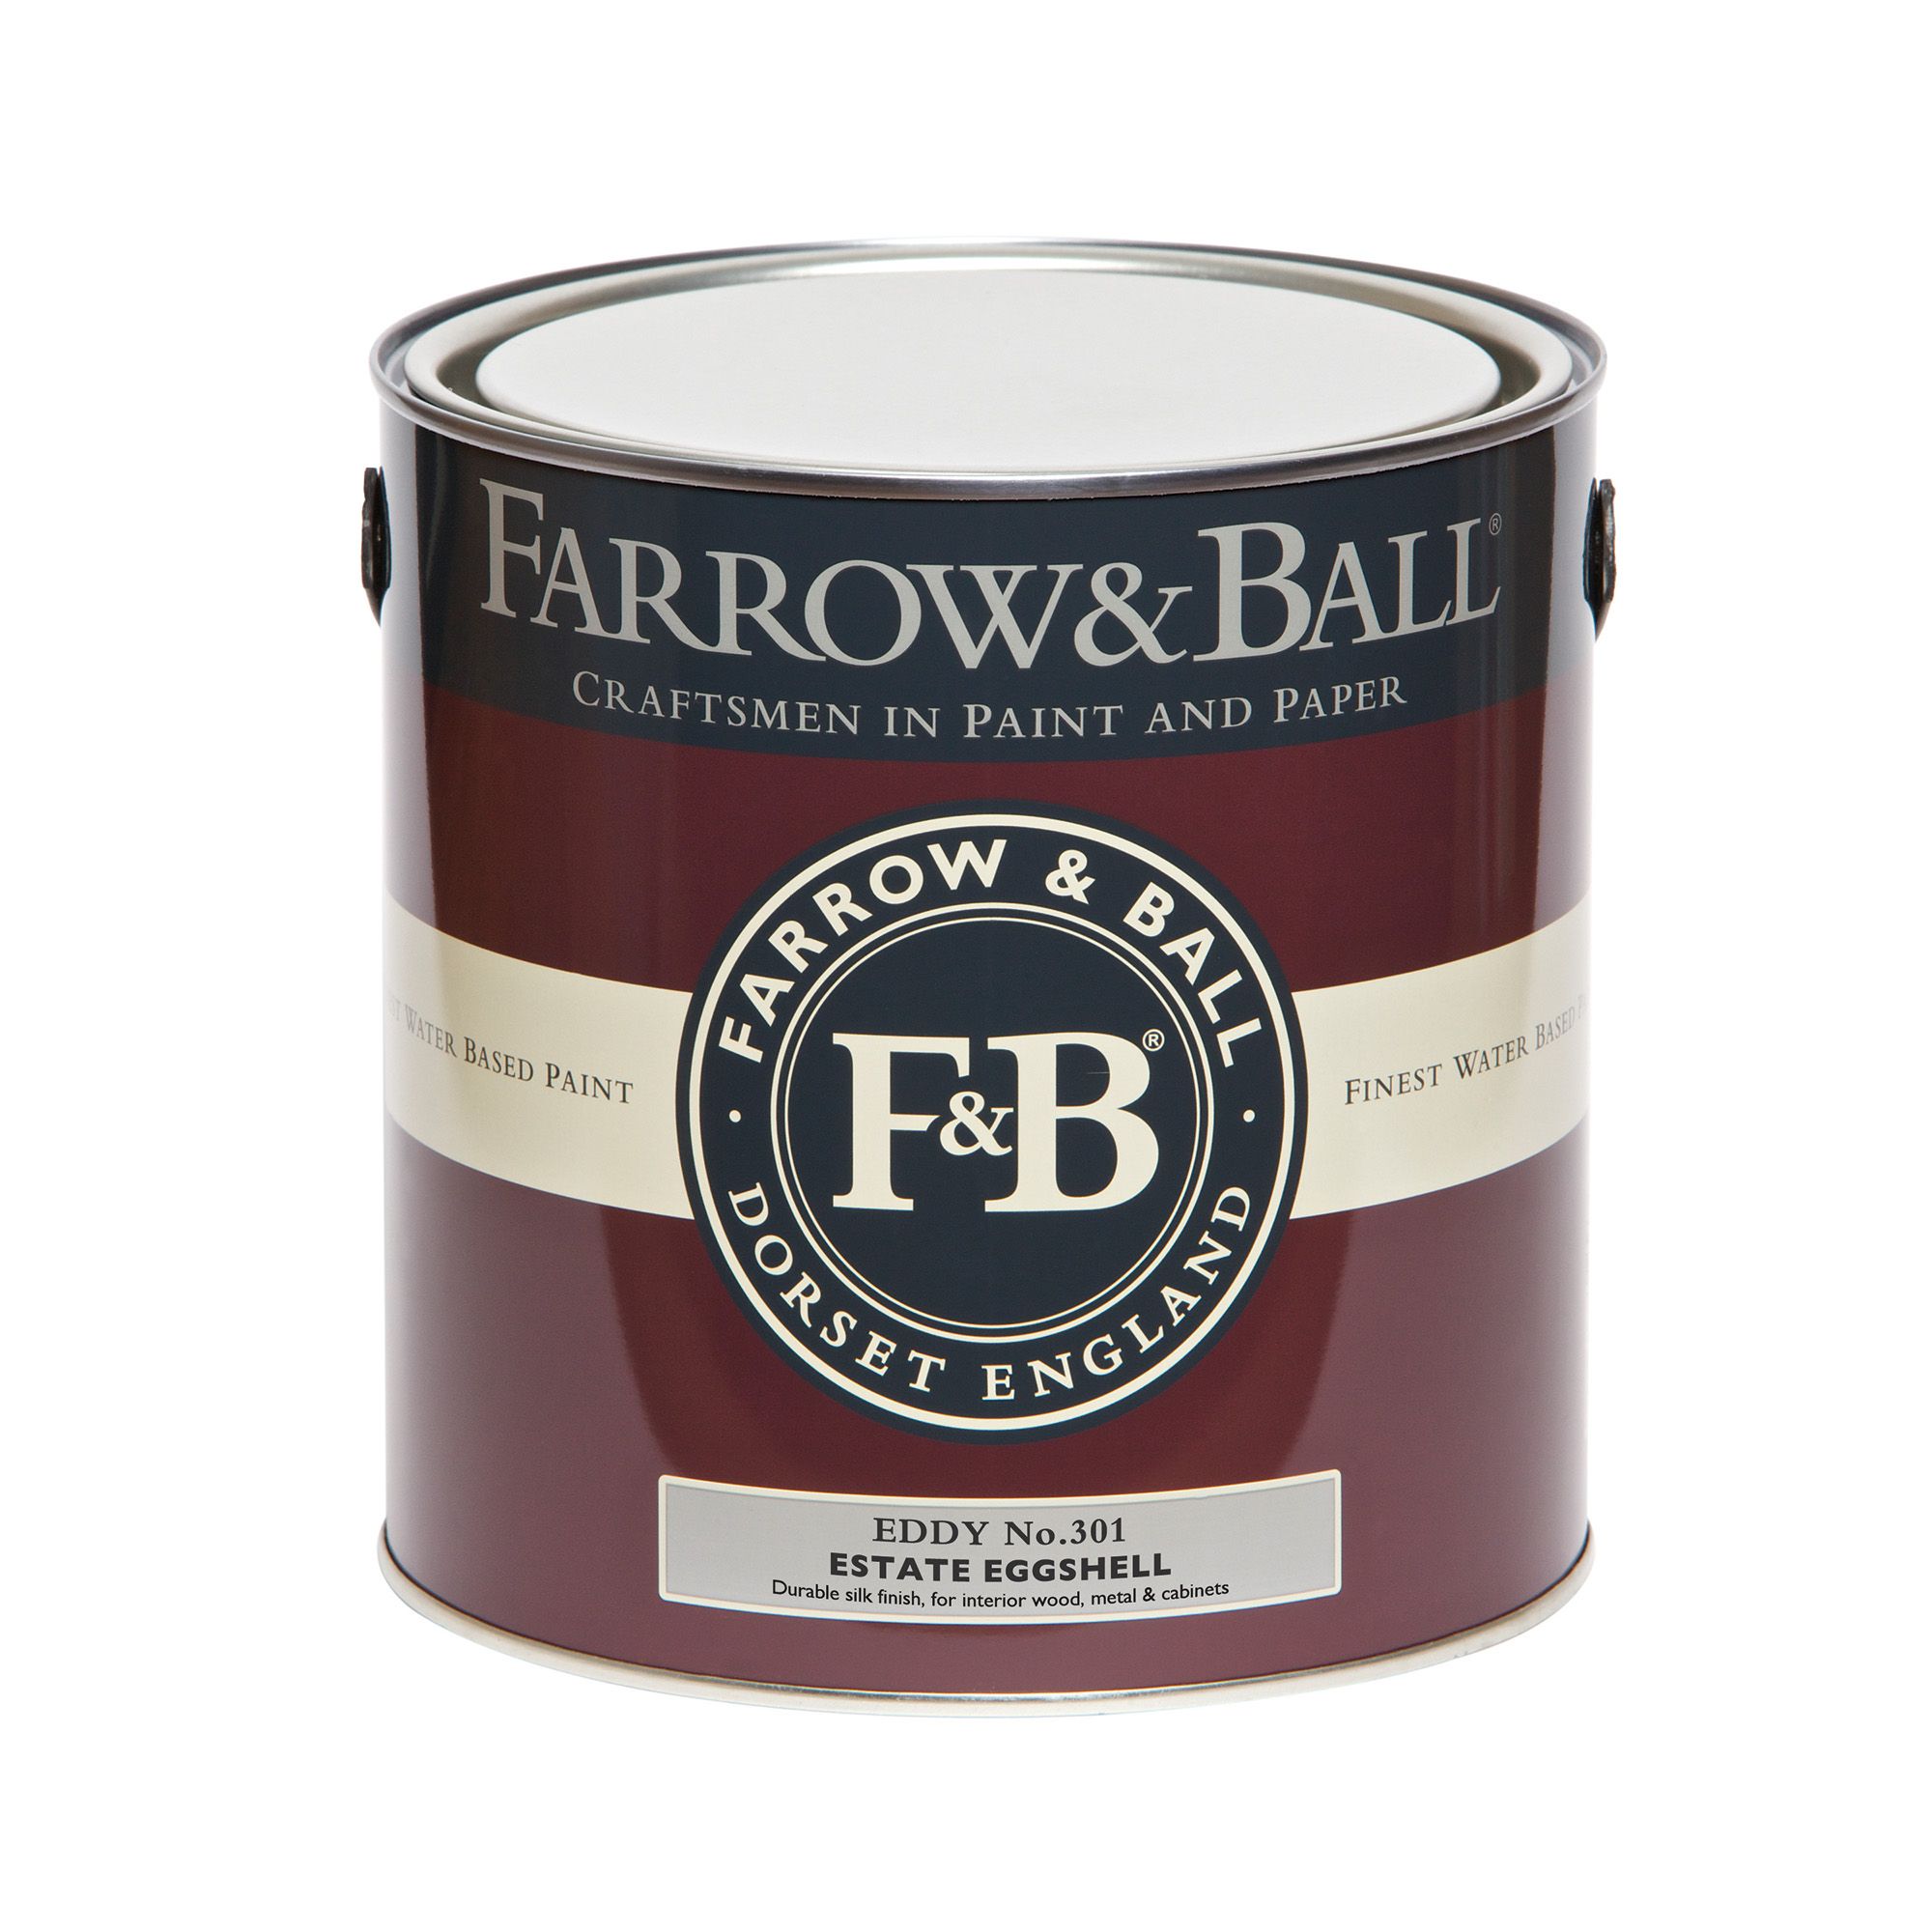 Farrow & Ball Estate Eddy No.301 Eggshell Paint, 2.5L